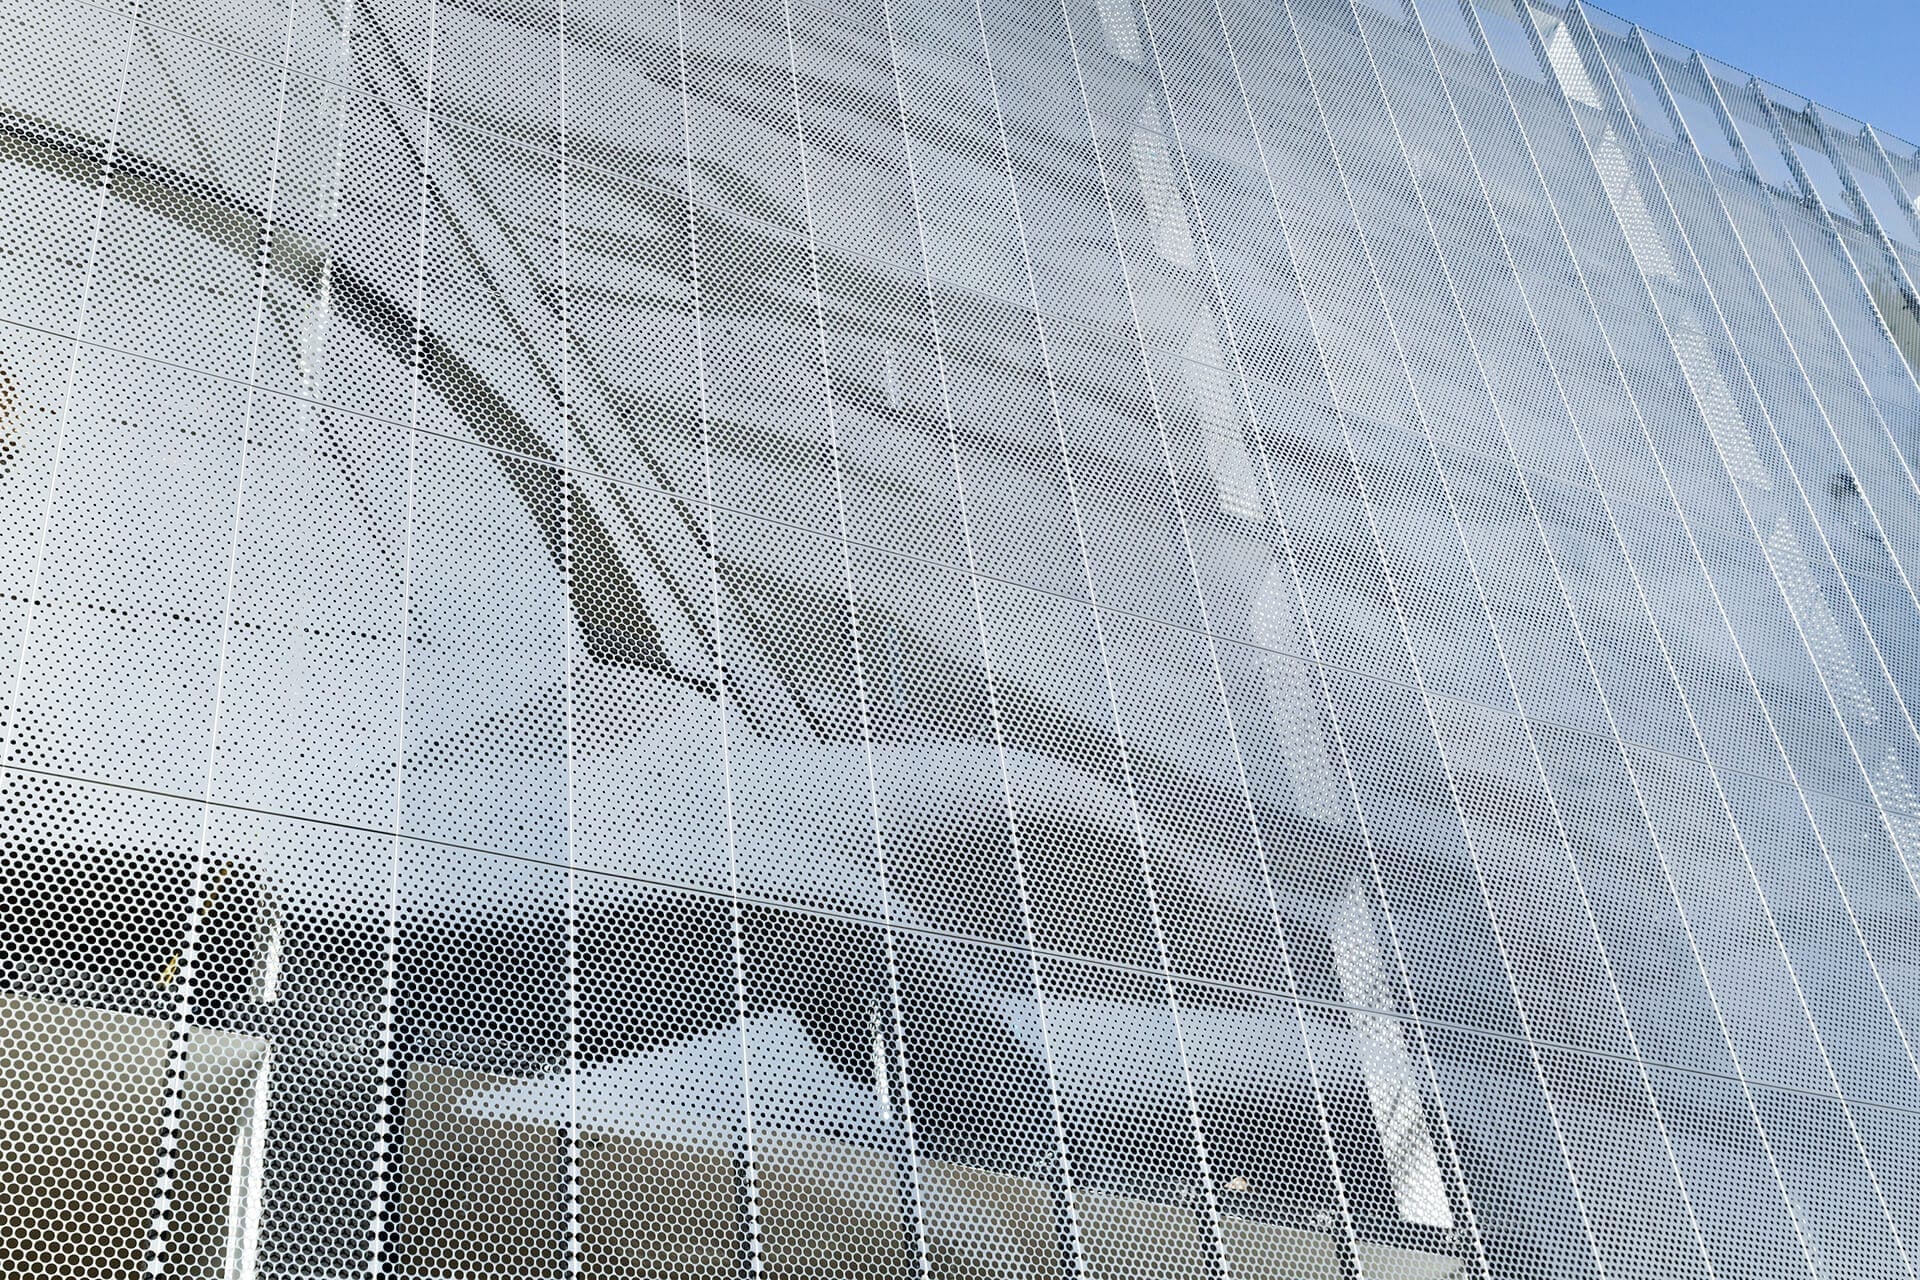 Parking garage facade designed by artist John Baldessari using ImageWall and Angel Hair Stainless Steel.